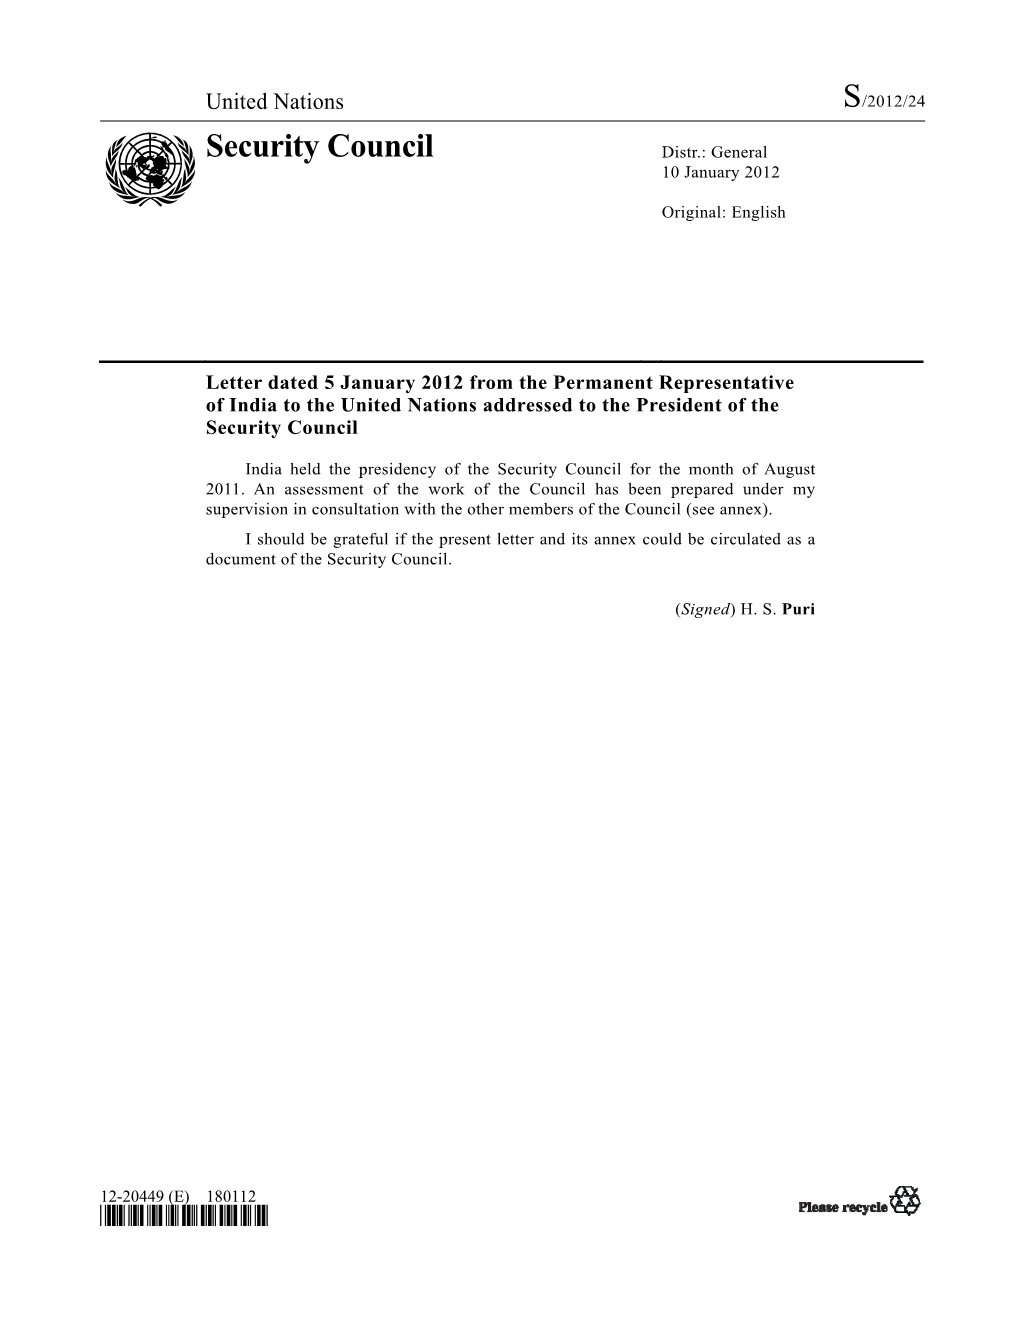 Security Council Distr.: General 10 January 2012